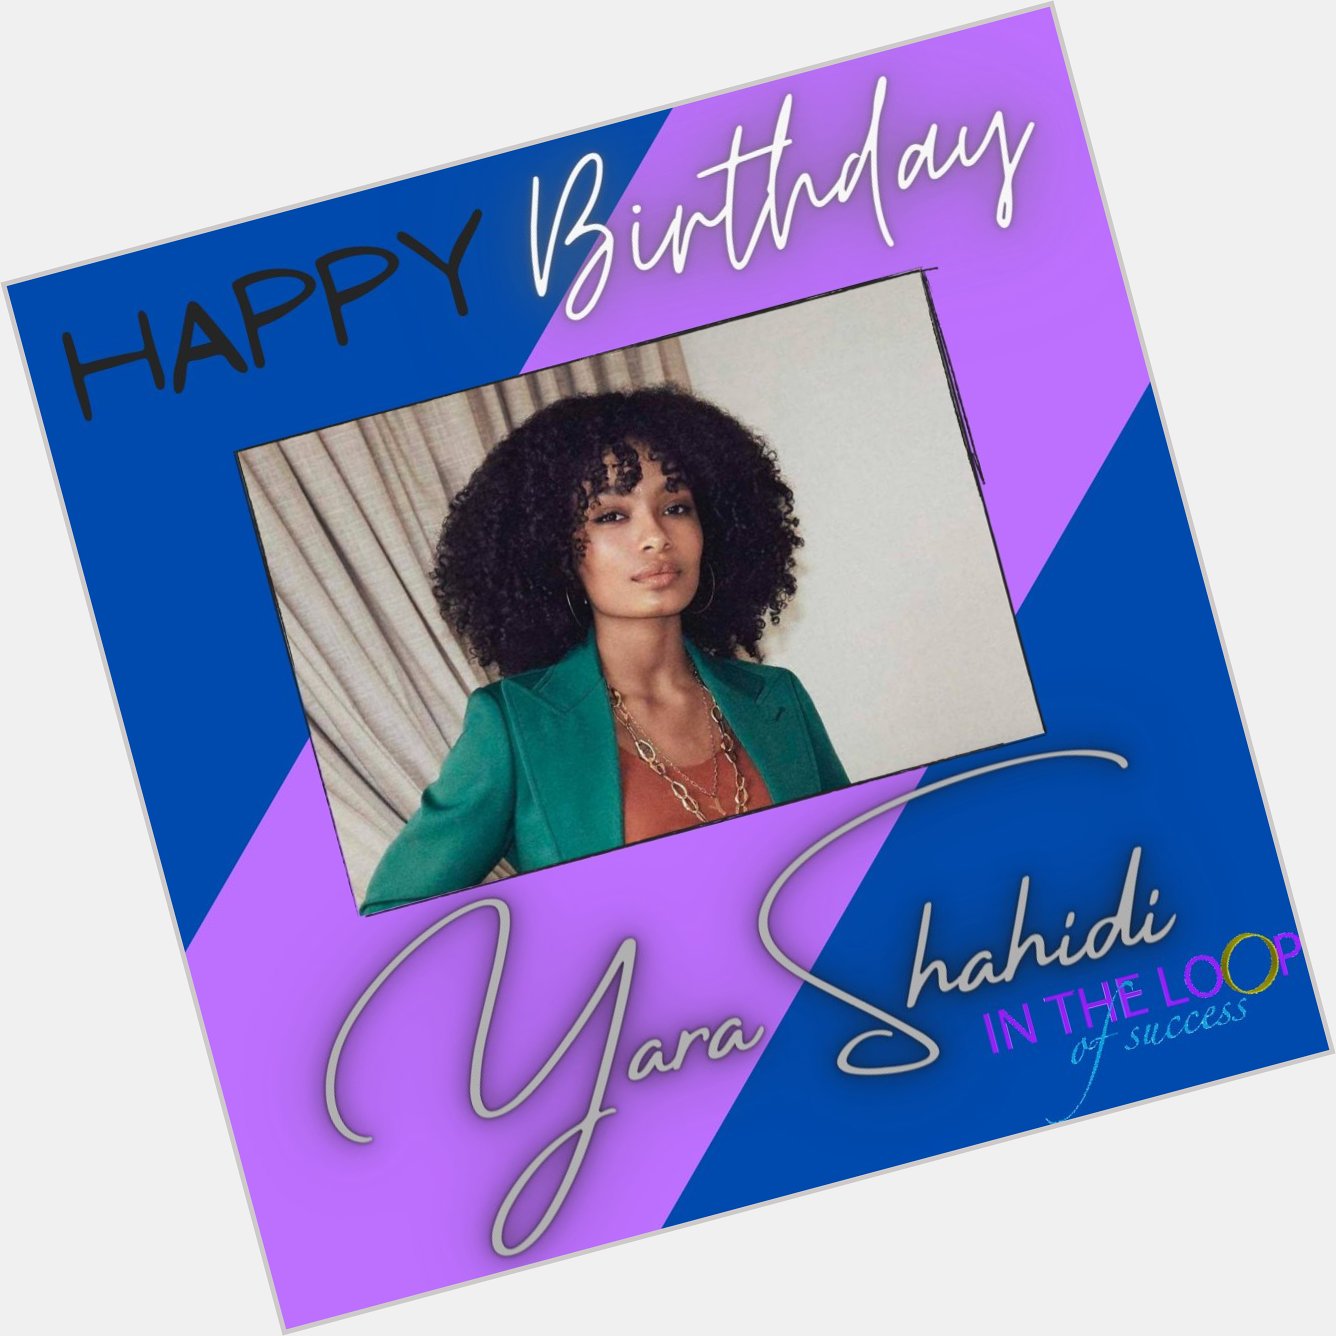 Happy birthday to the dynamic Yara Shahidi a happy birthday!  